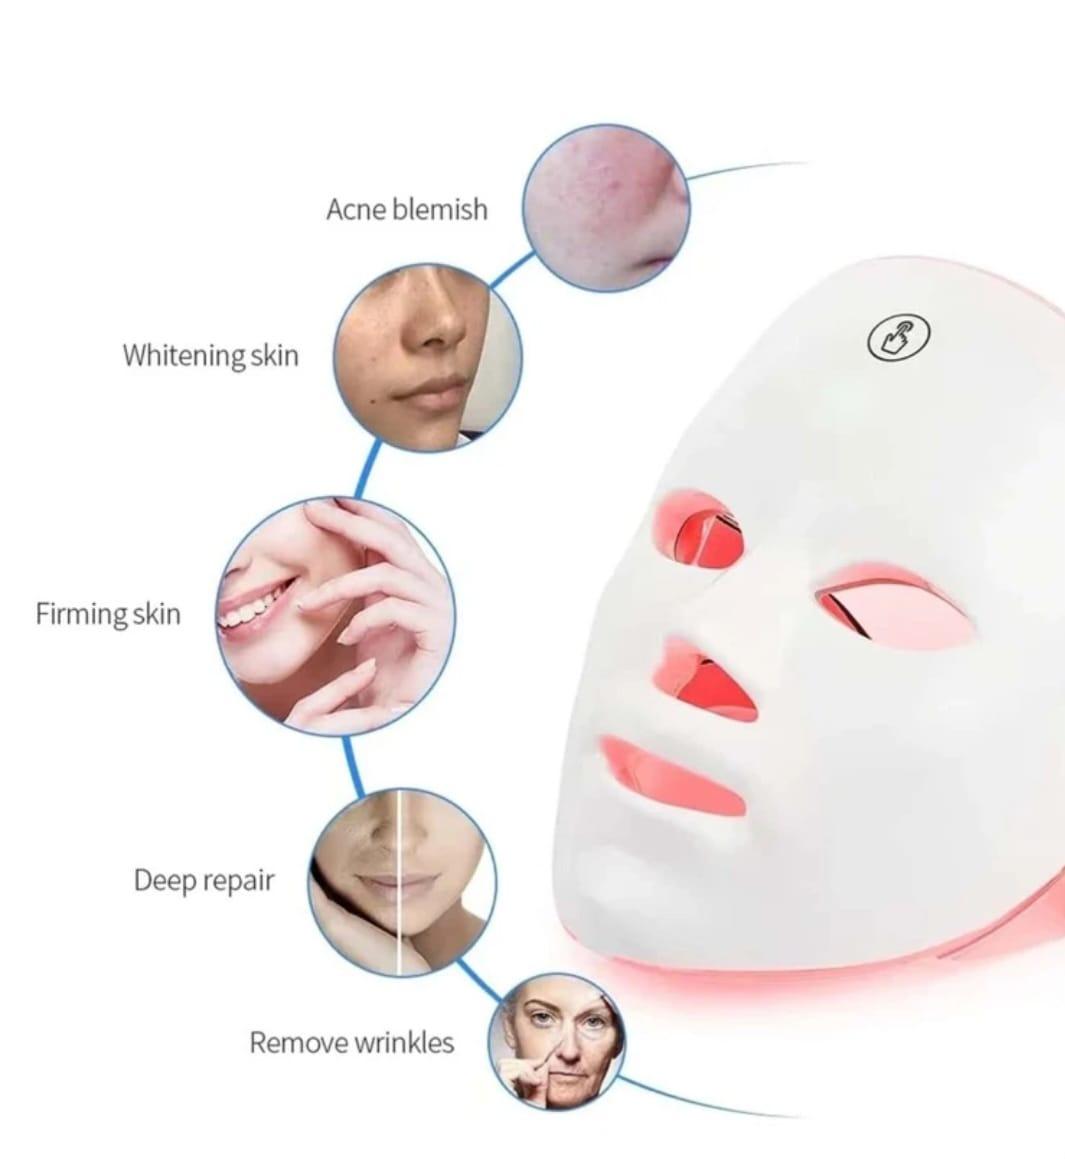 Photontherapy Led Light mask - Anti-ageing, skin health, acne (E)